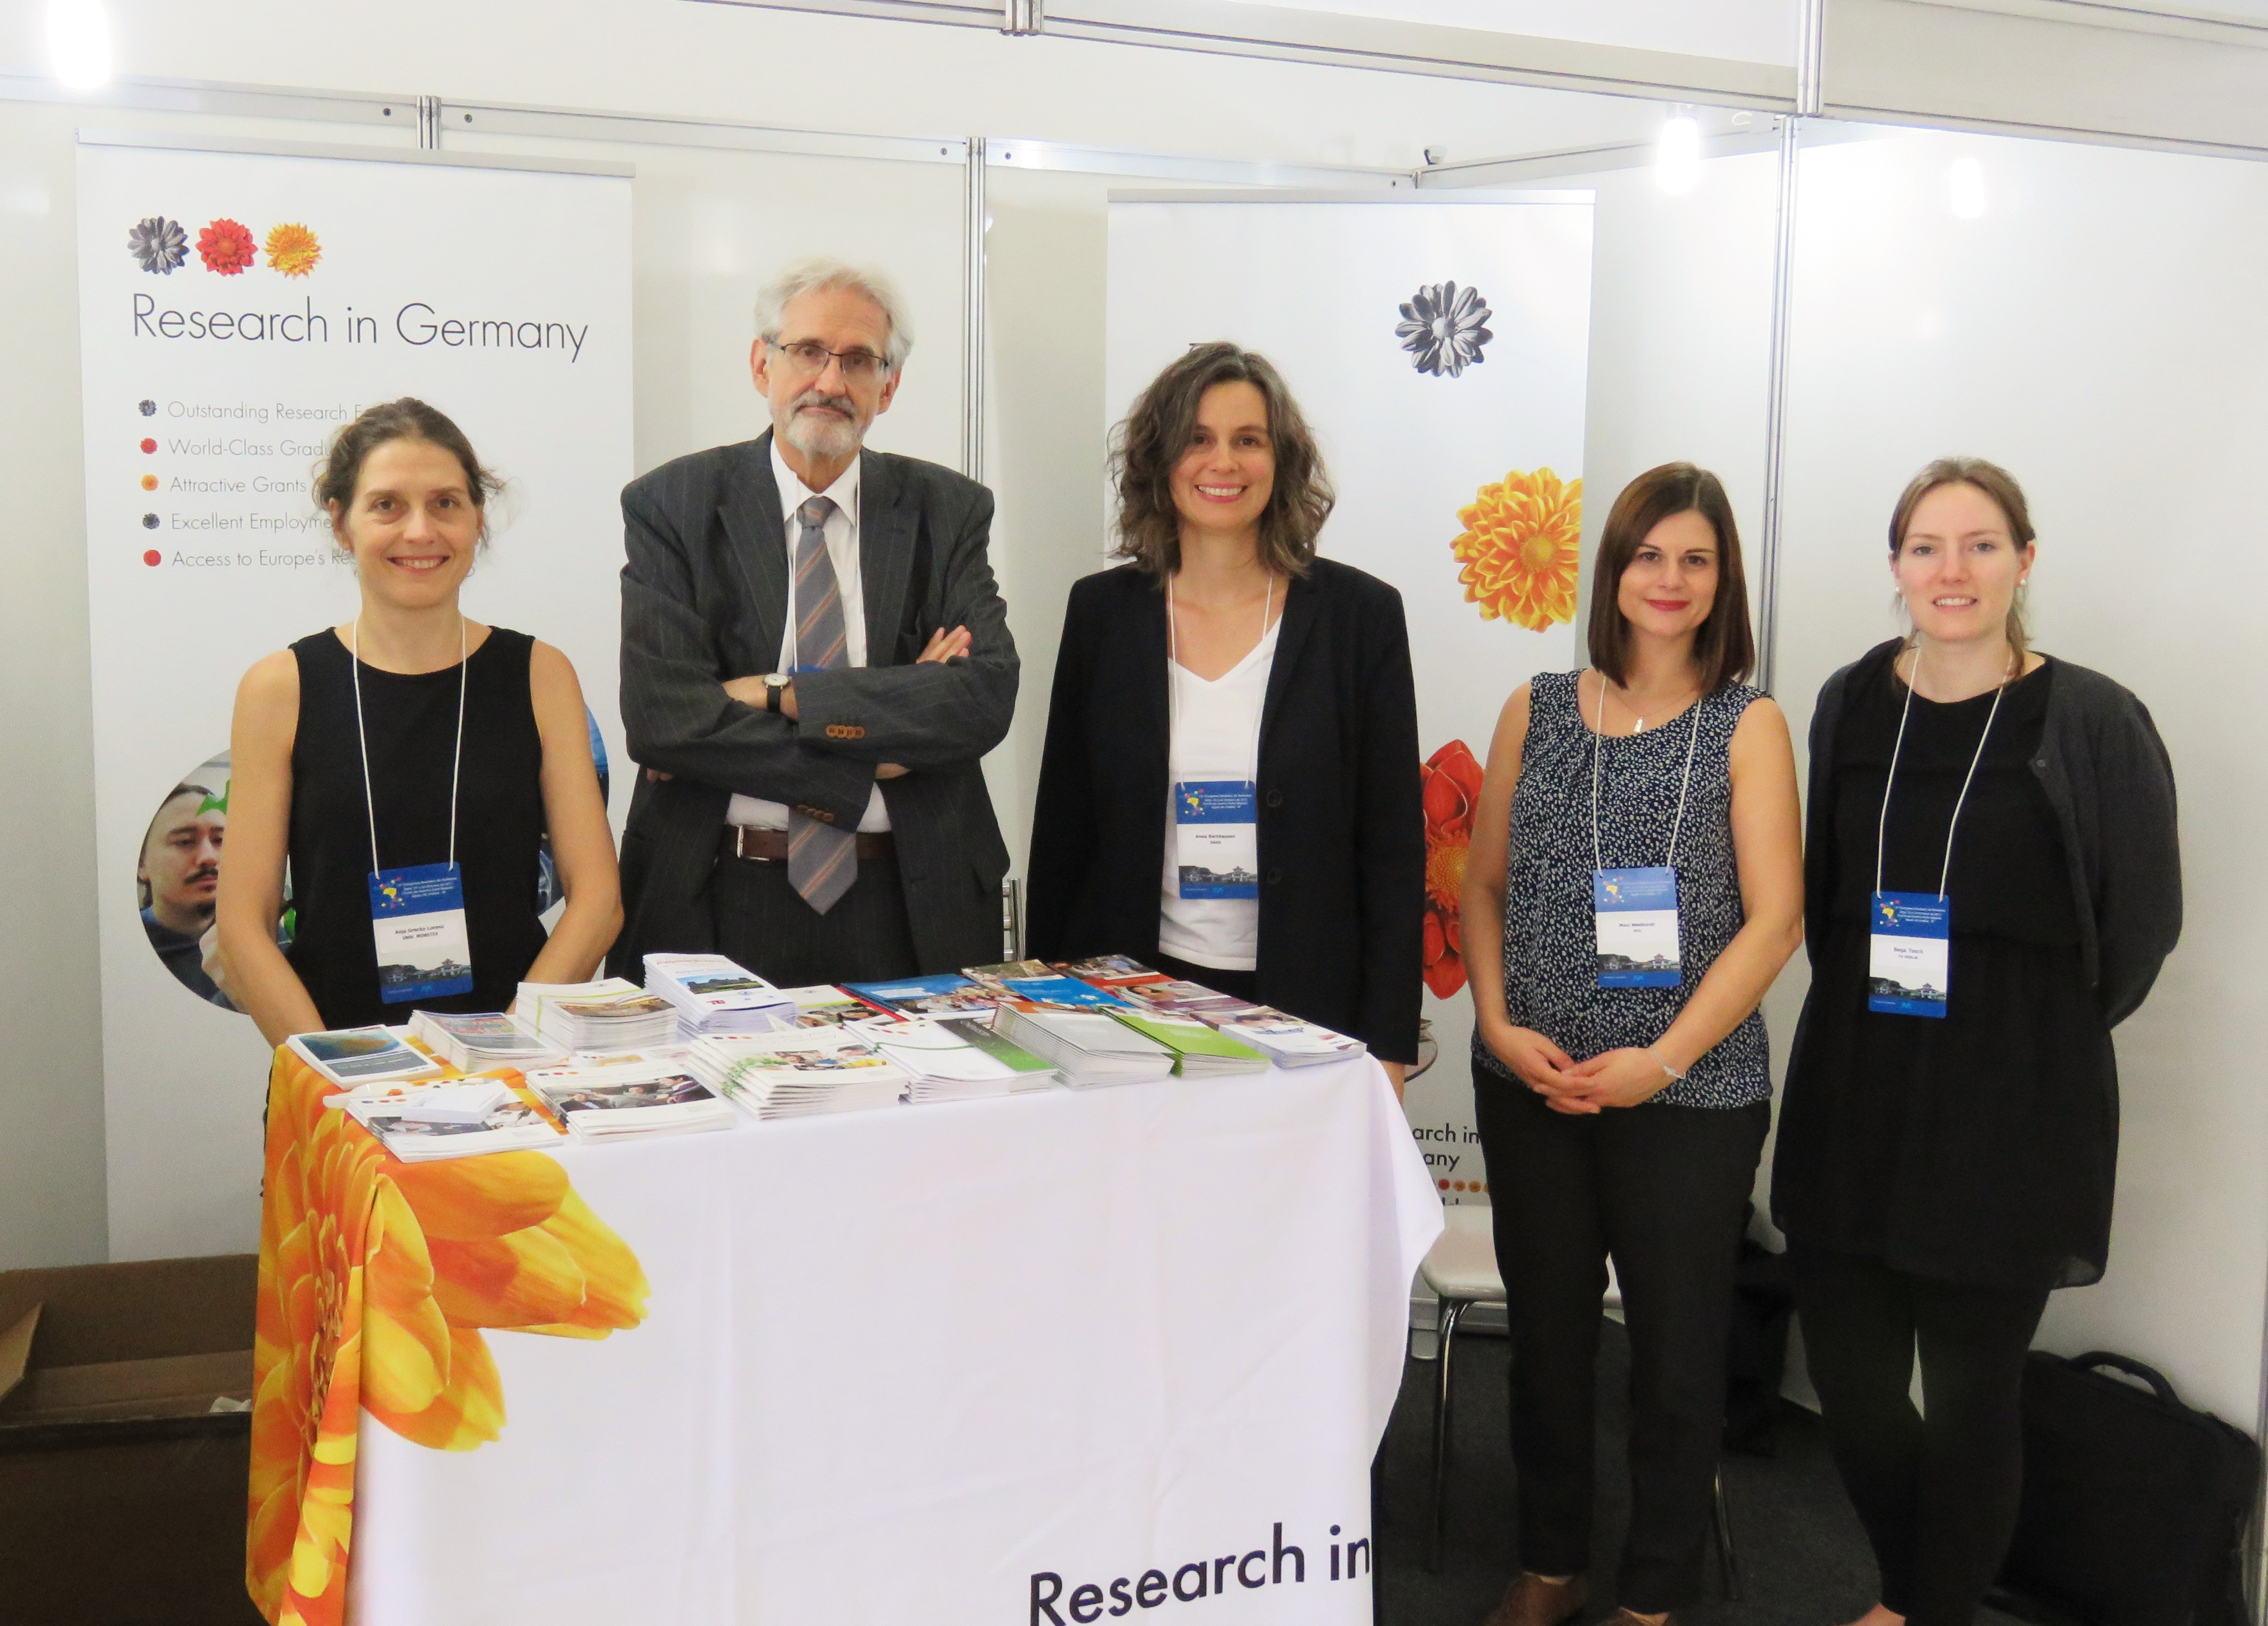 Anja Grecko (WWU Münster), Helmut Galle (DFG/USP), Anna Barkhausen (DAAD), Maxi Neidhardt (DFG) y Bega Tesch (FU Berlin) en el stand de Research in Germany